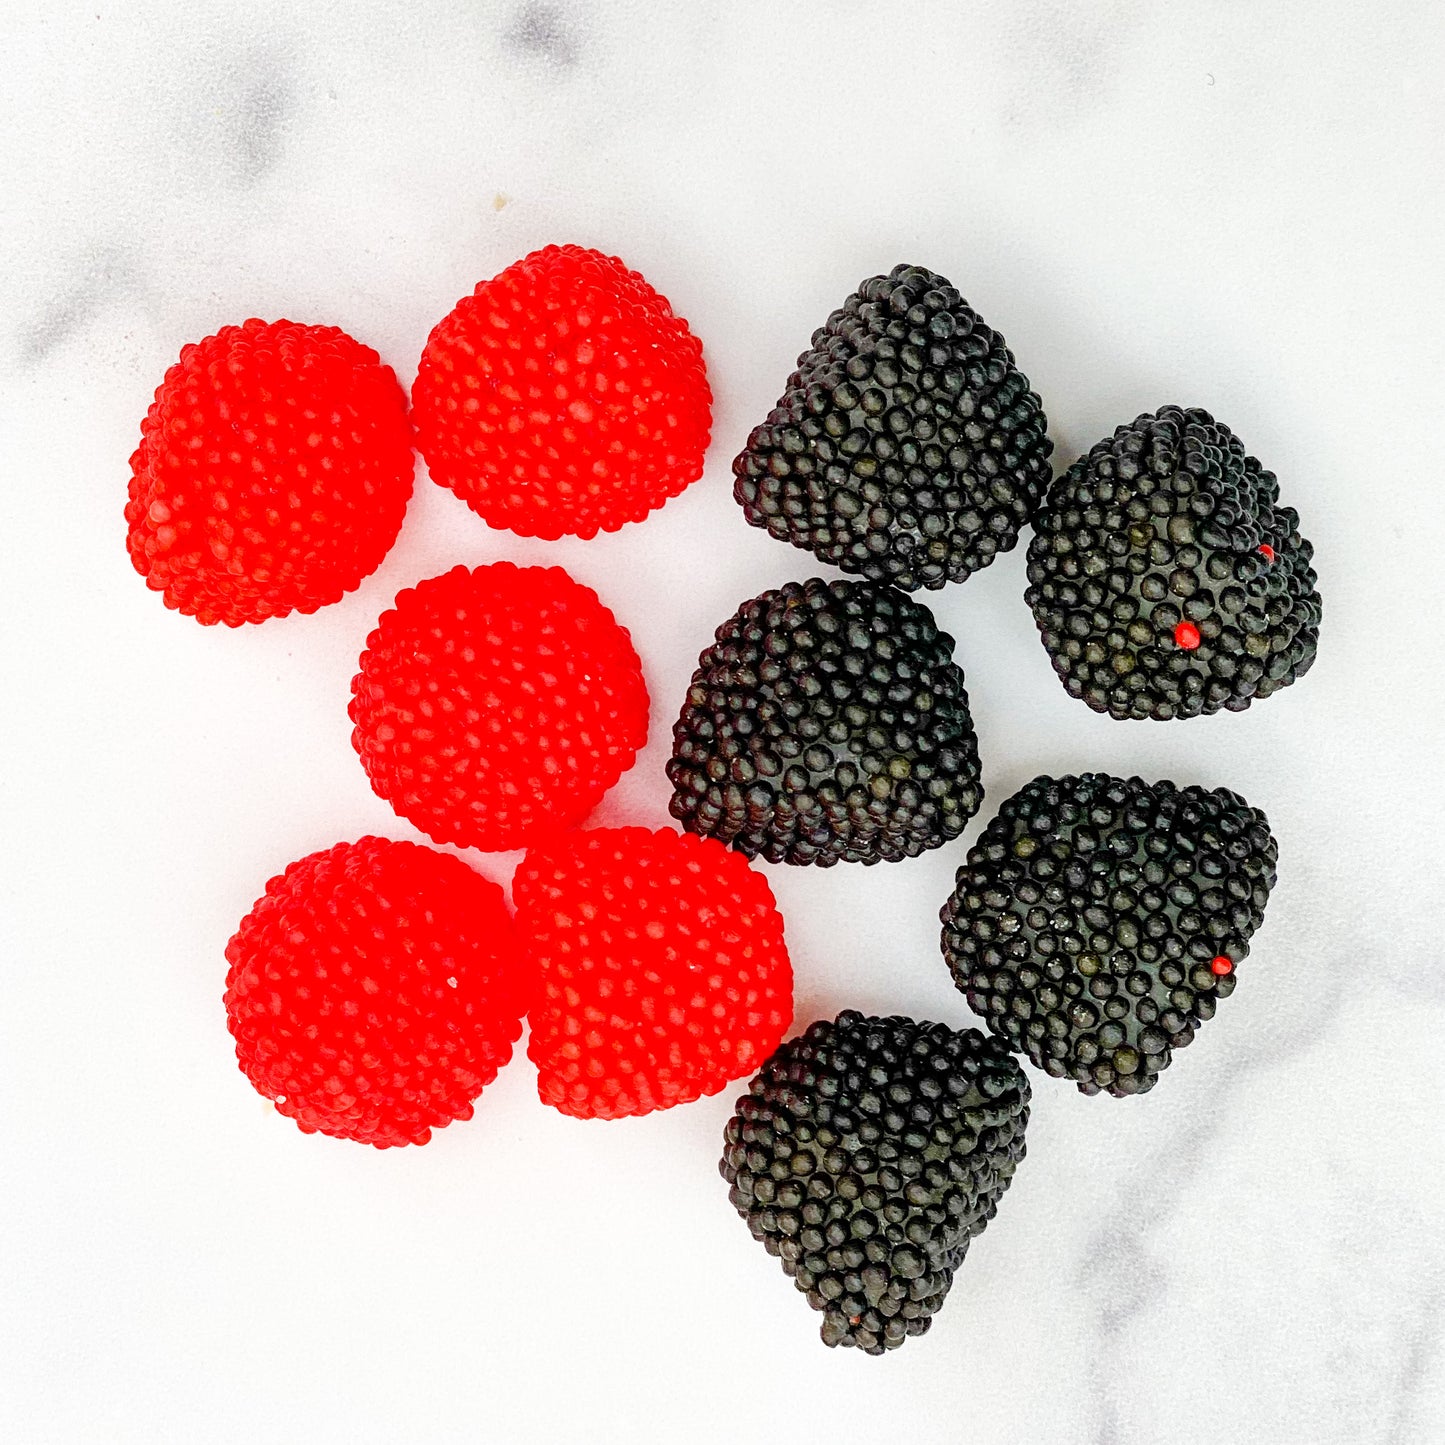 Red & Black Raspberry Seeds